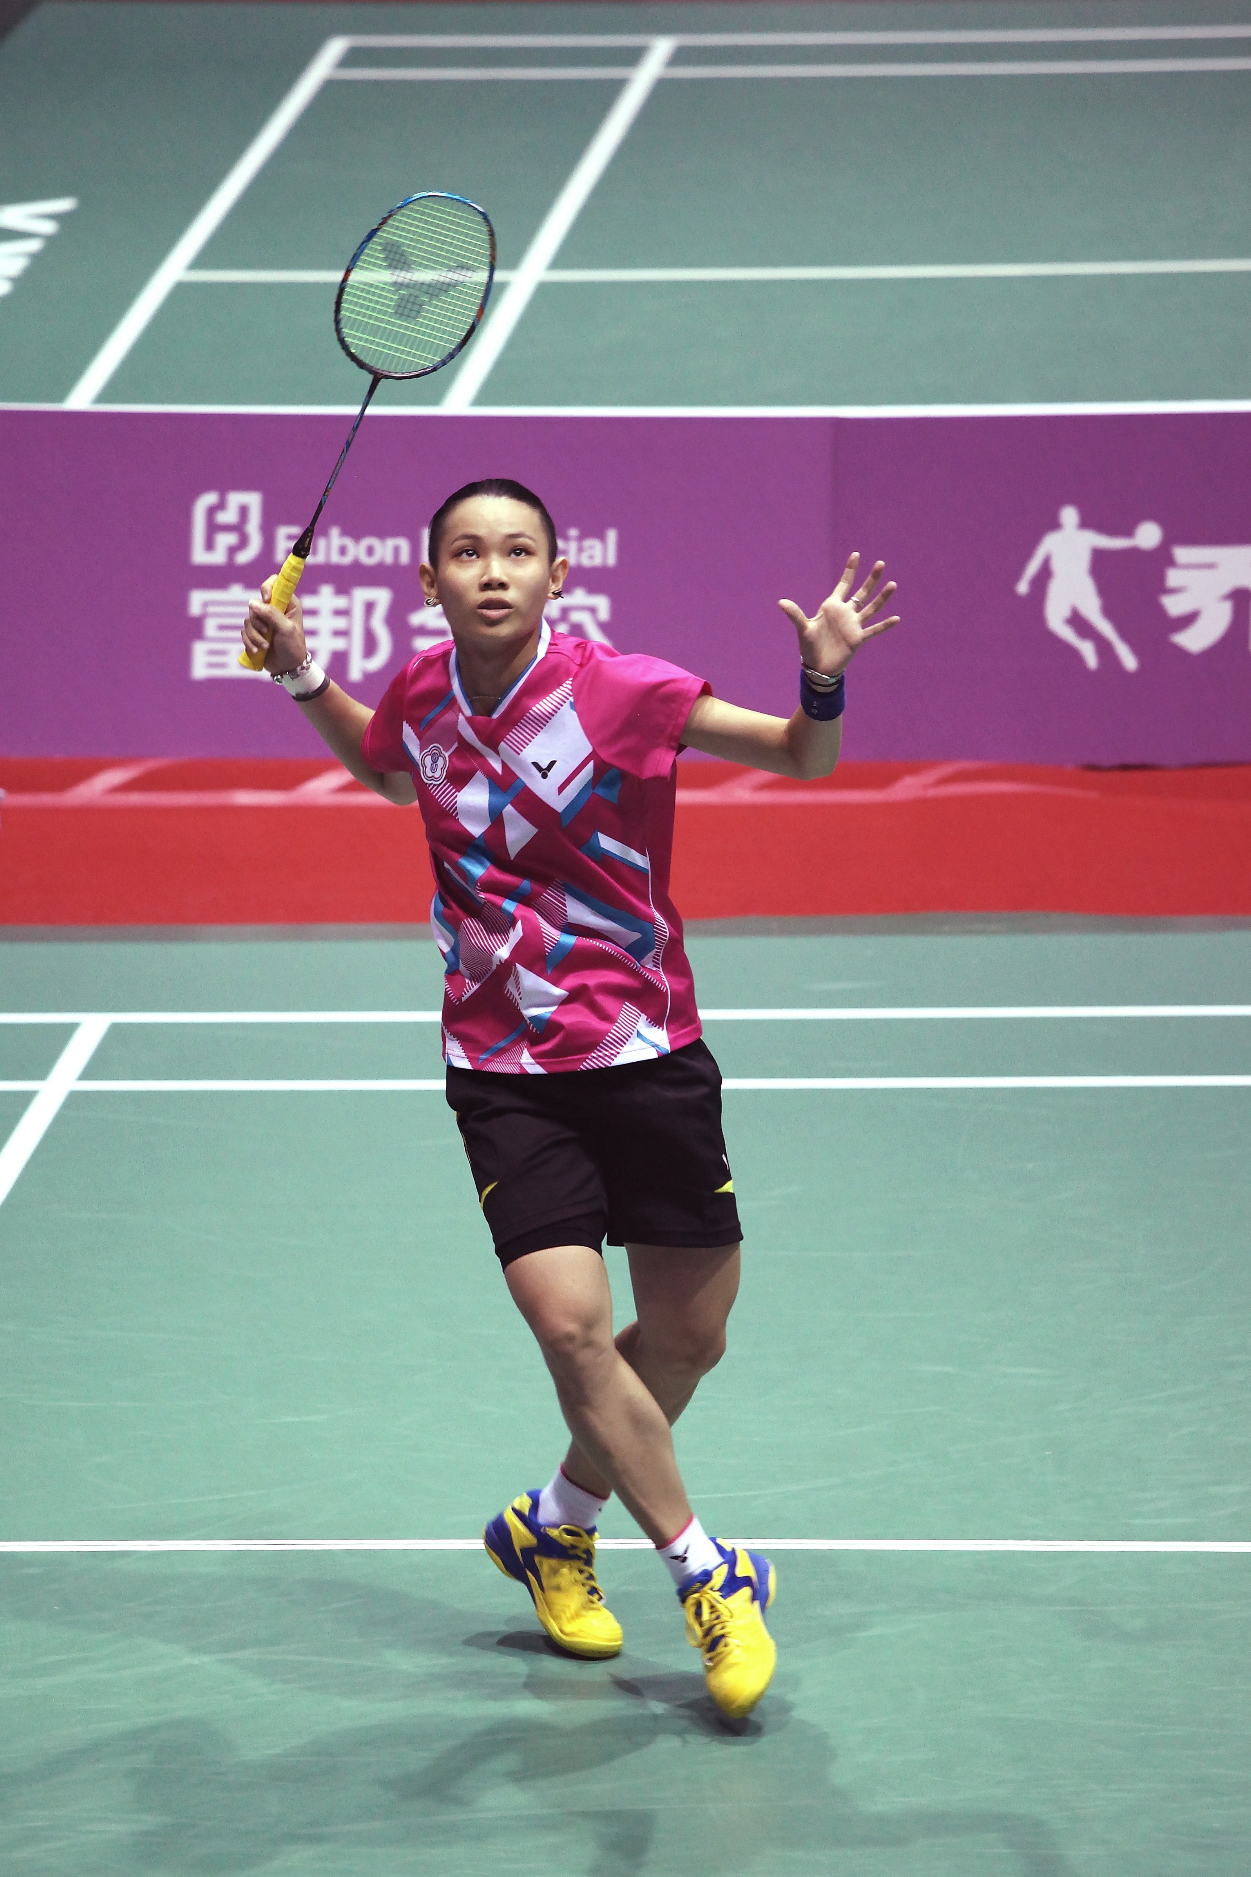 Tai Tzu Ying Badminton – A Player Study